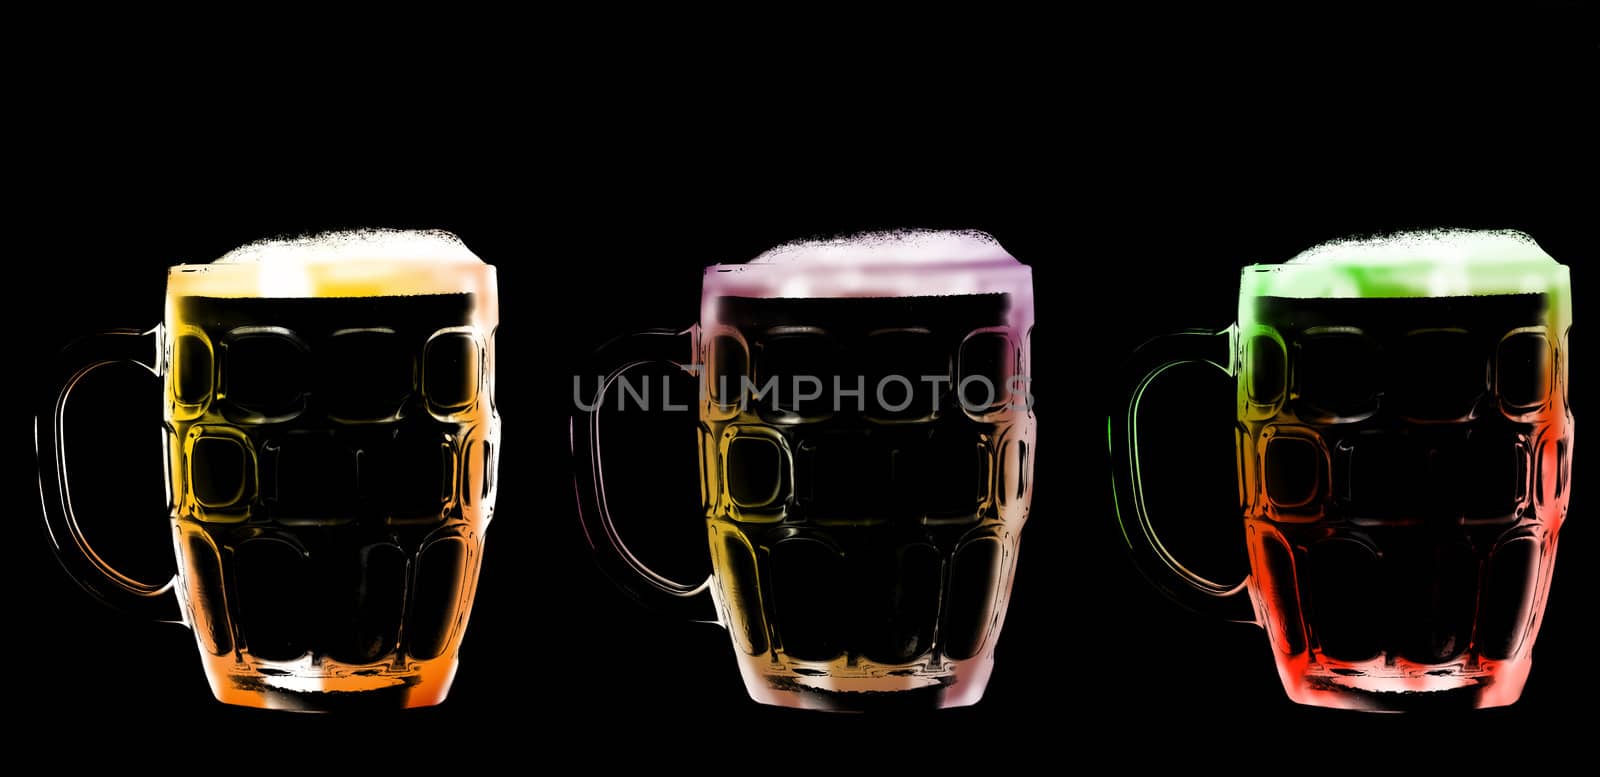 Glass beer mug with beer on a black background